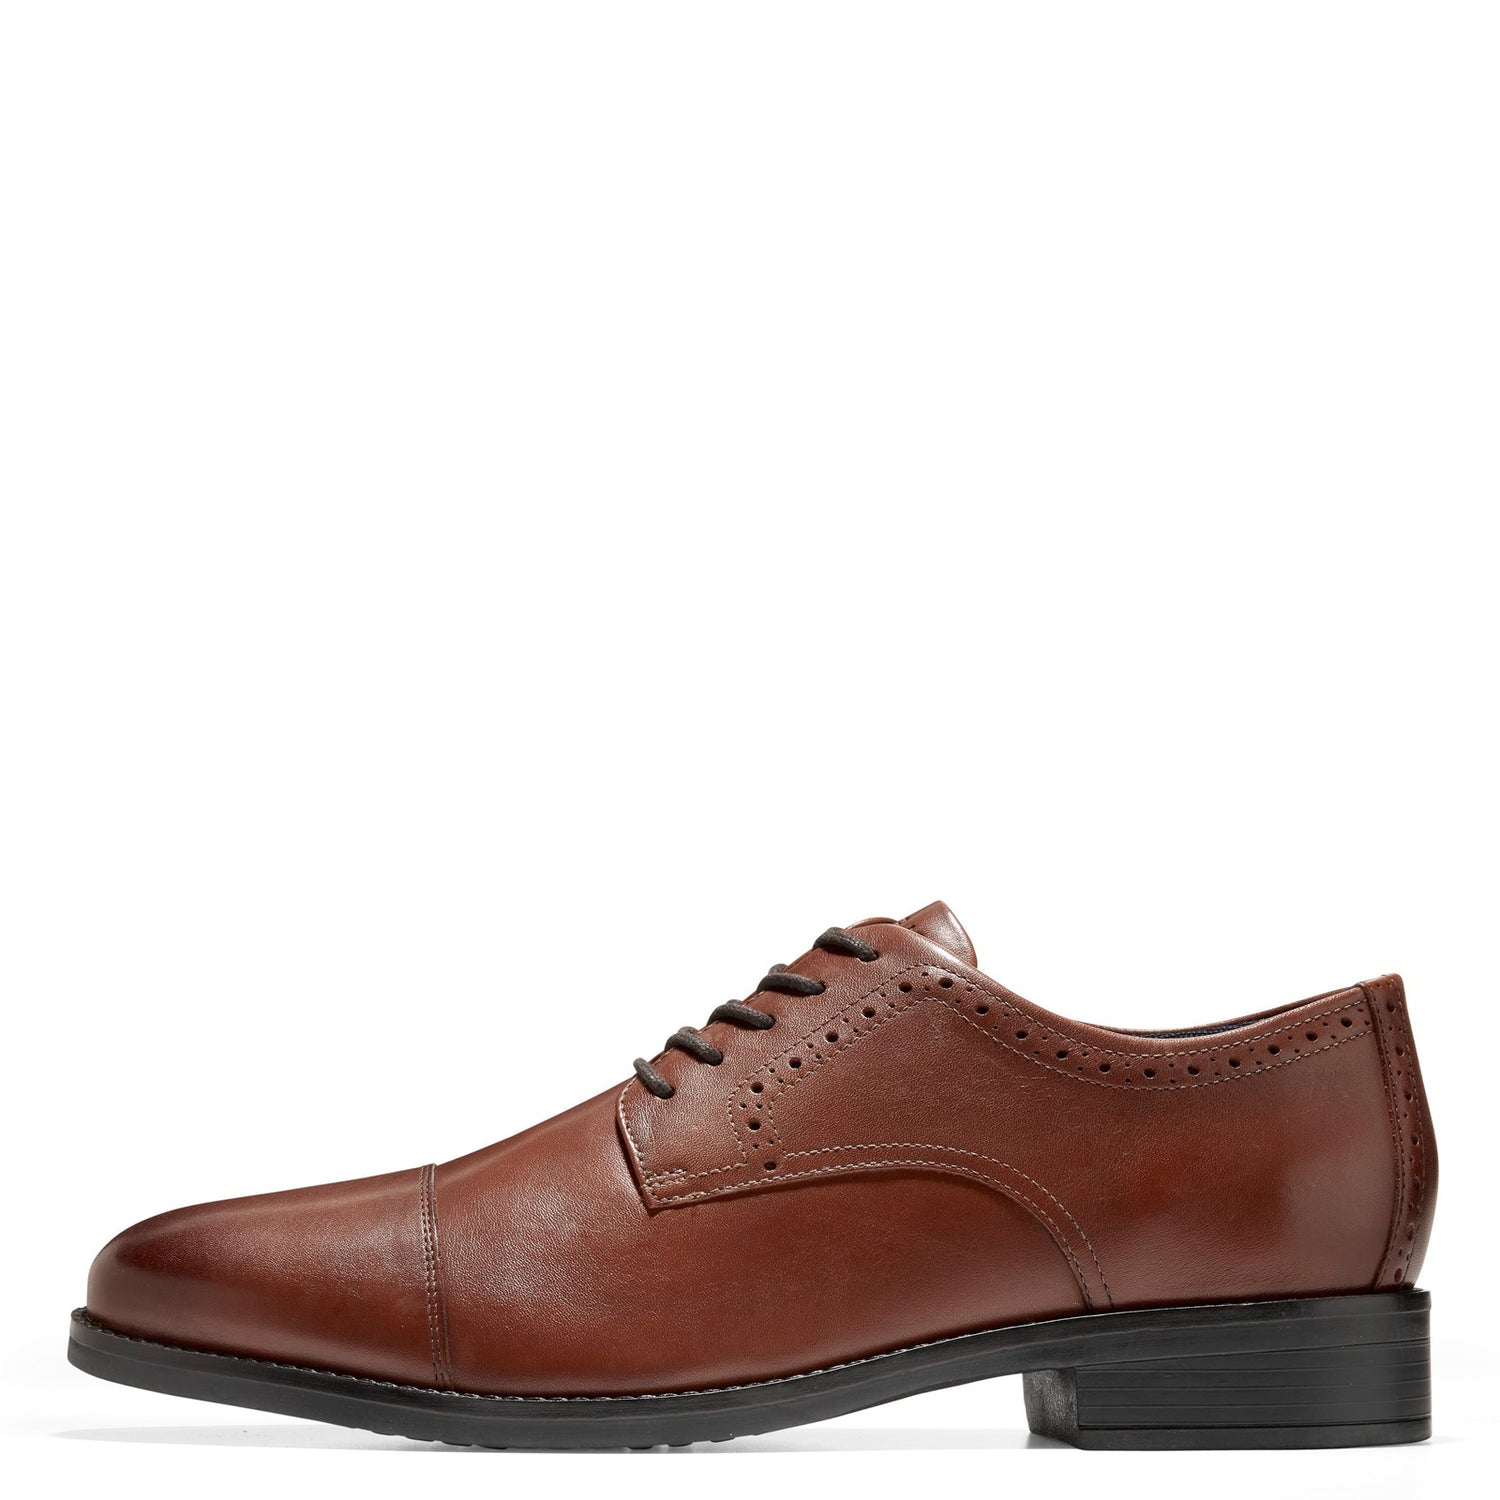  Cole Haan Men's Grand+ Plain Toe Oxford, British TAN  Leather/Ivory, 7